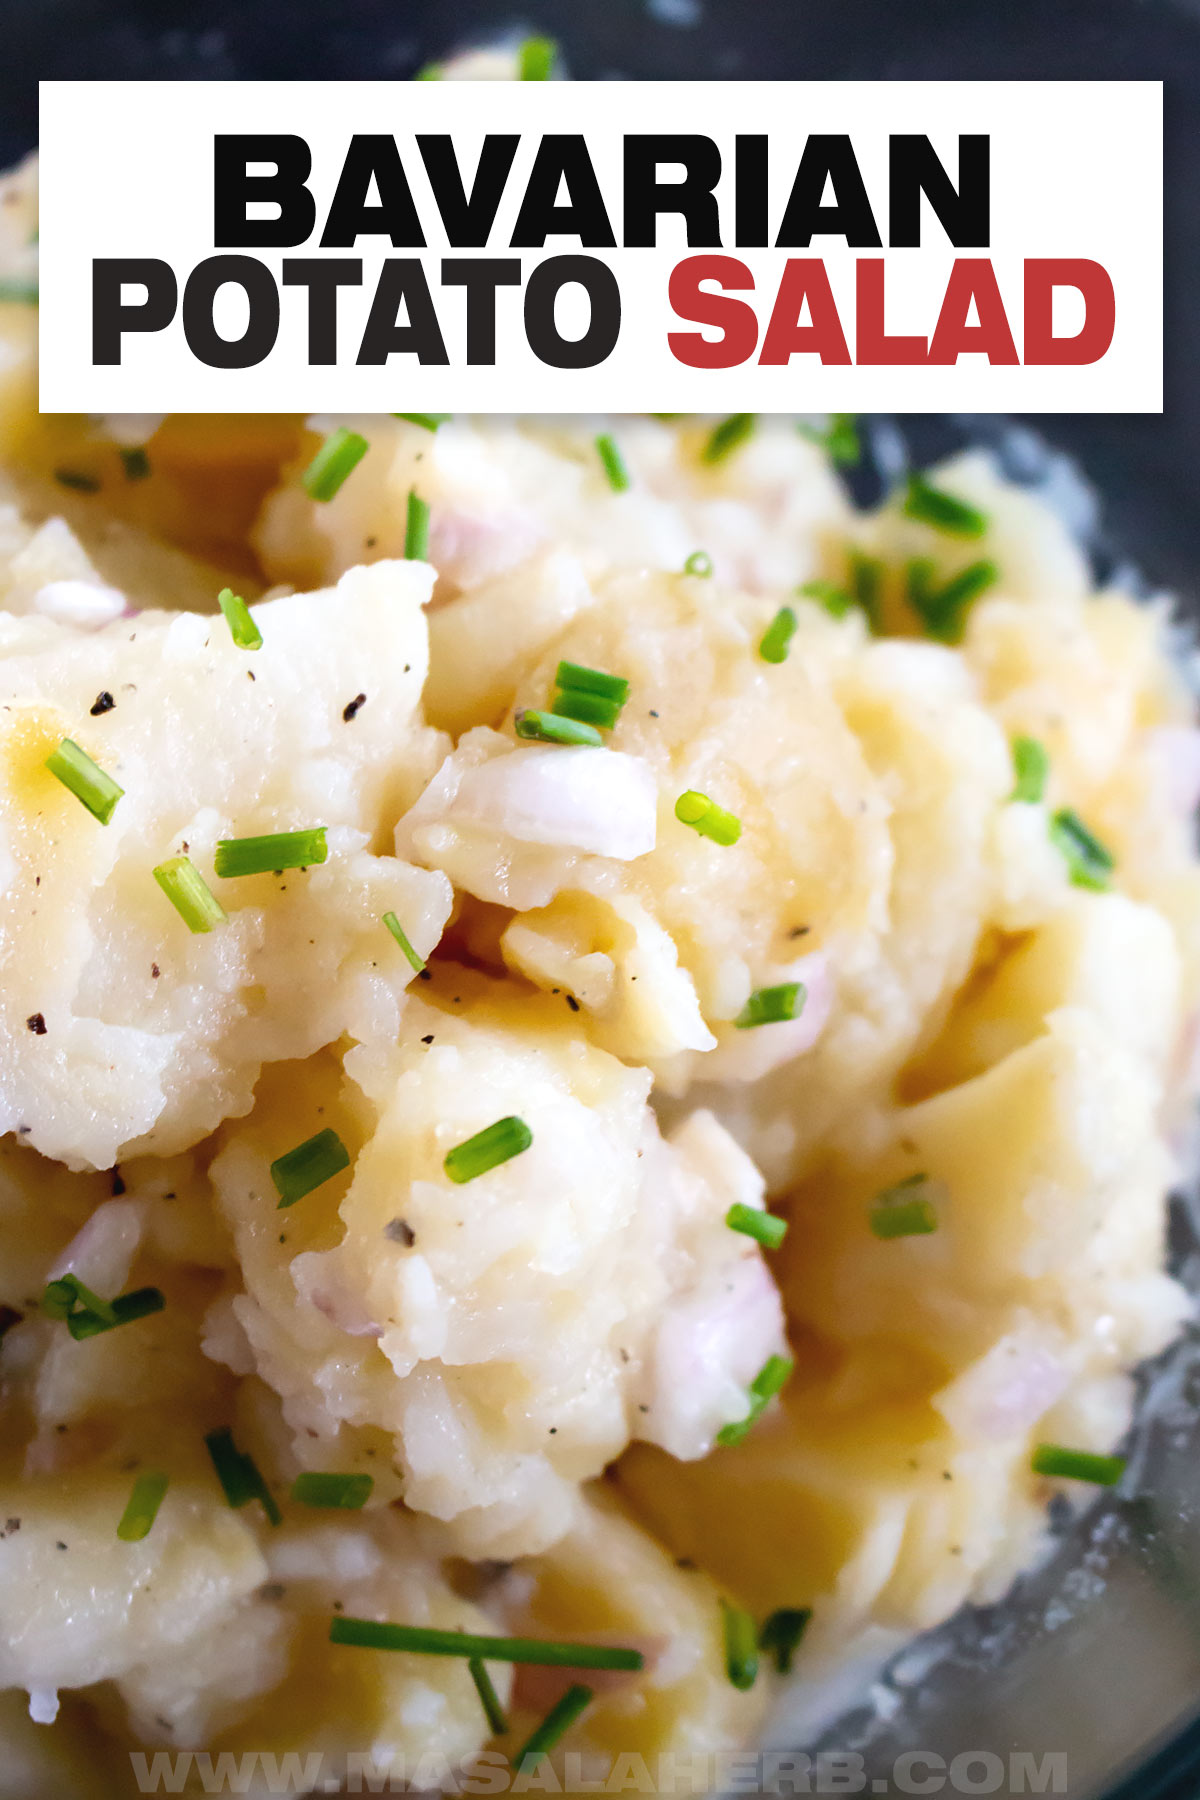 Bavarian Potato Salad Recipe cover image